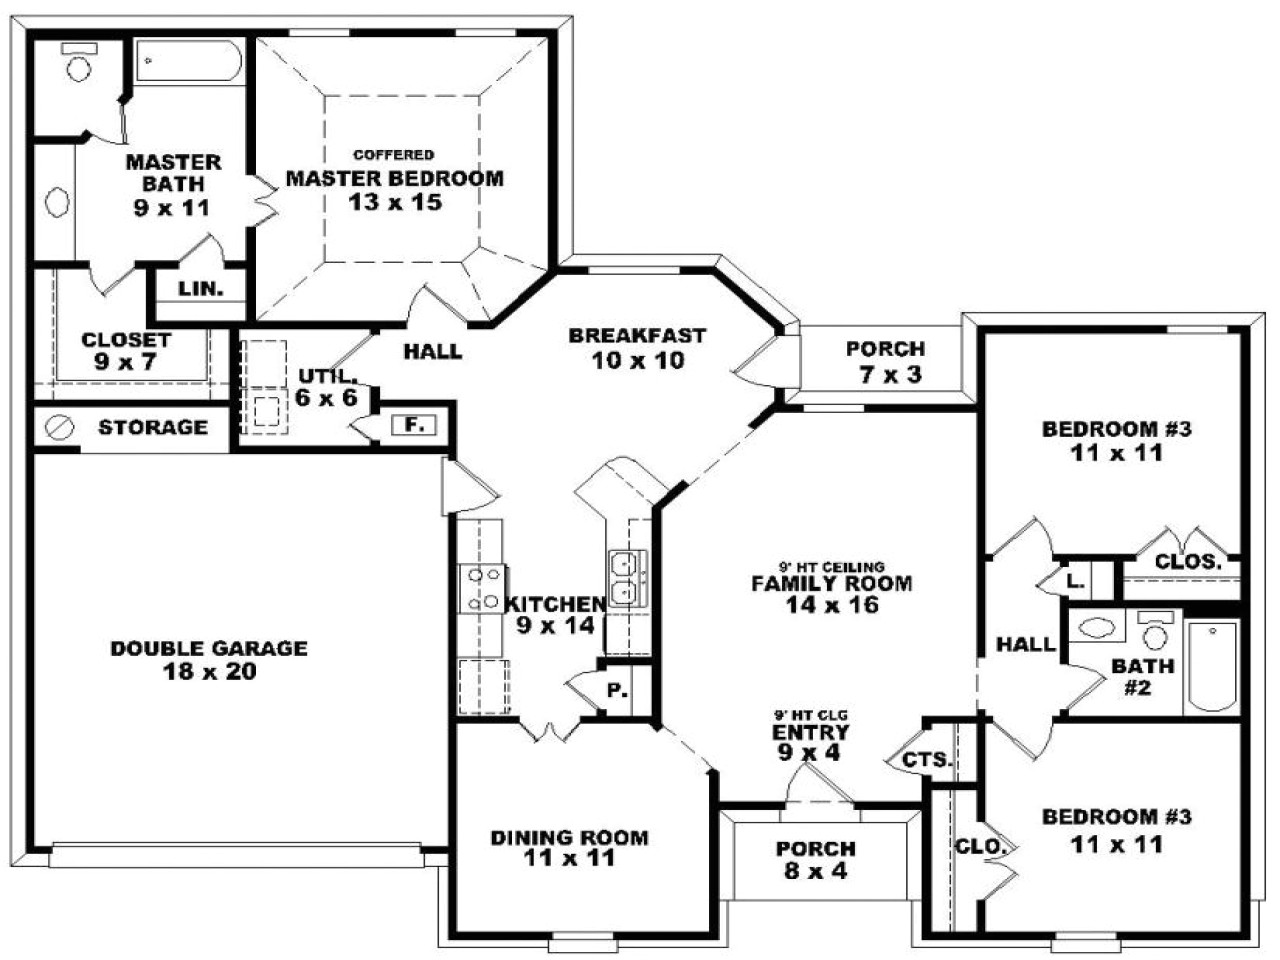 a12a551d061713a1 3 level home plans house floor plans 3 bedroom 2 bath